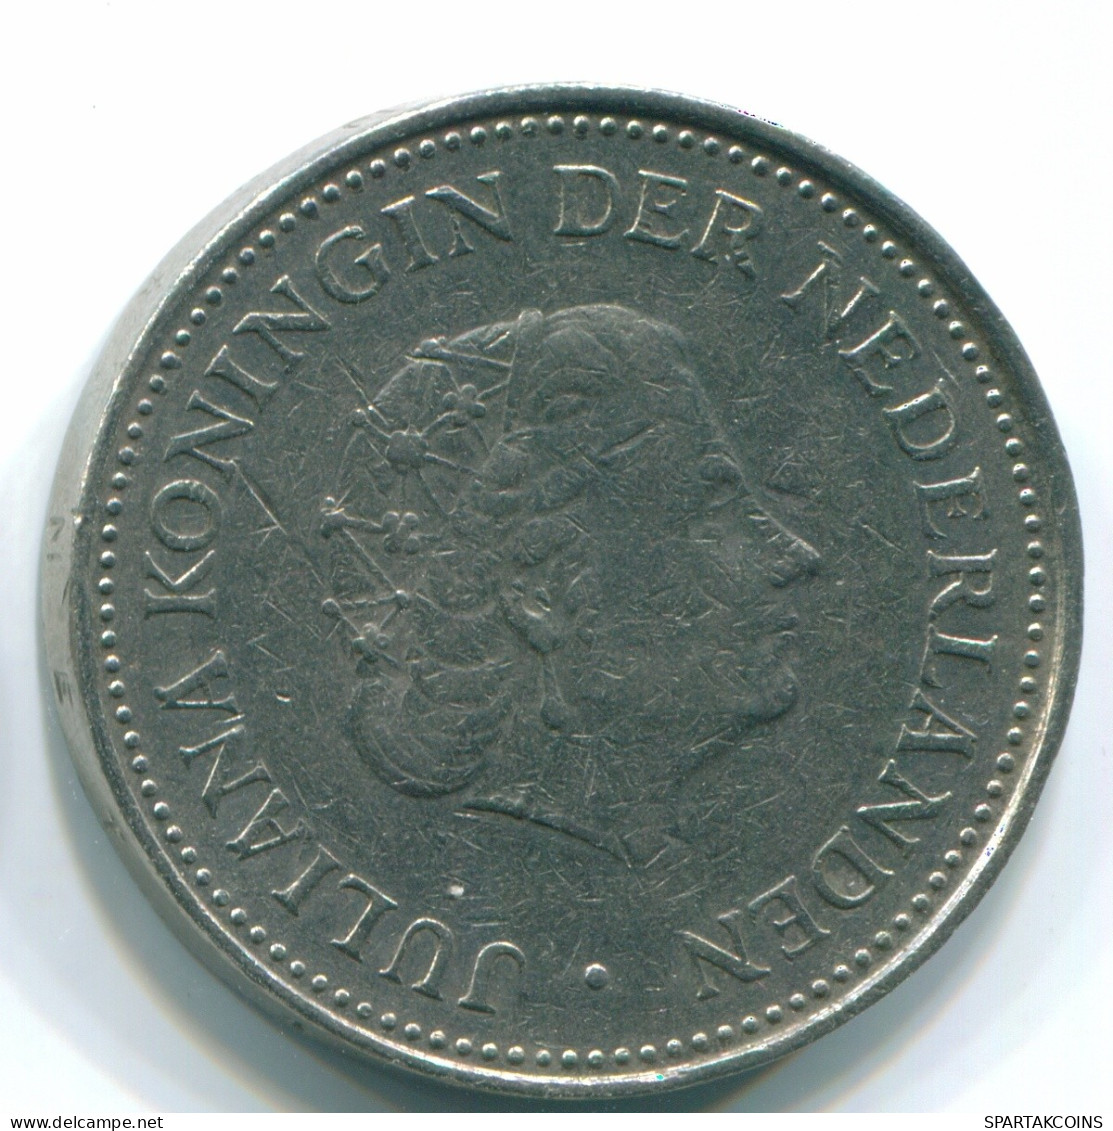 1 GULDEN 1971 NETHERLANDS ANTILLES Nickel Colonial Coin #S12016.U.A - Antilles Néerlandaises